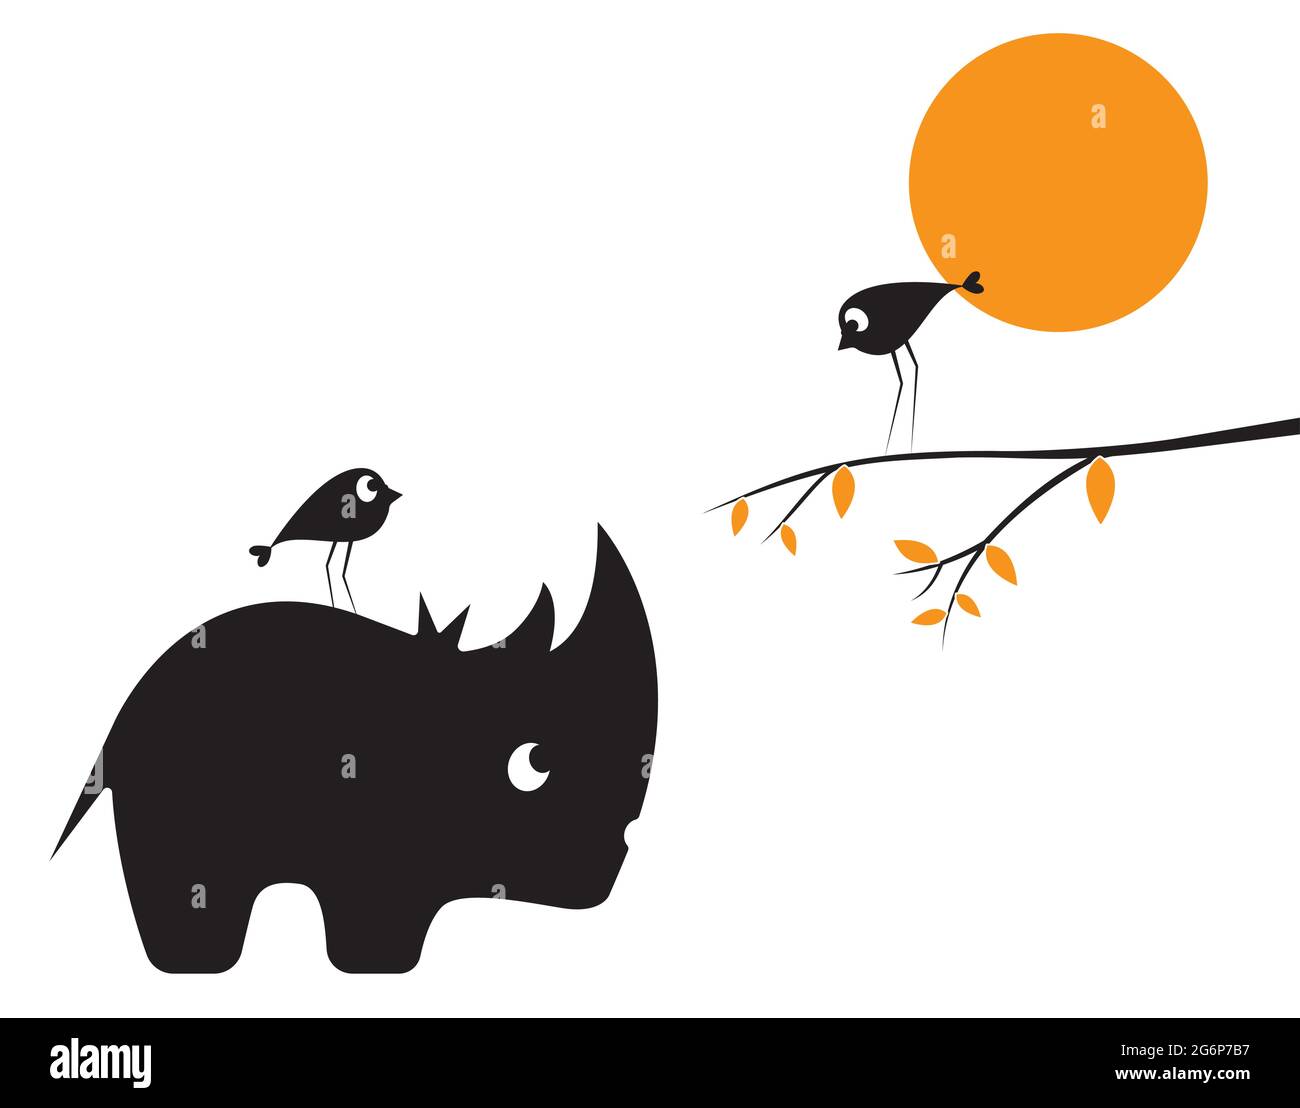 Rhino and bird cartoon illustration isolated on white background, vector. Rhino and bird silhouette on branch on sunset. Fun childish art design, wall Stock Vector